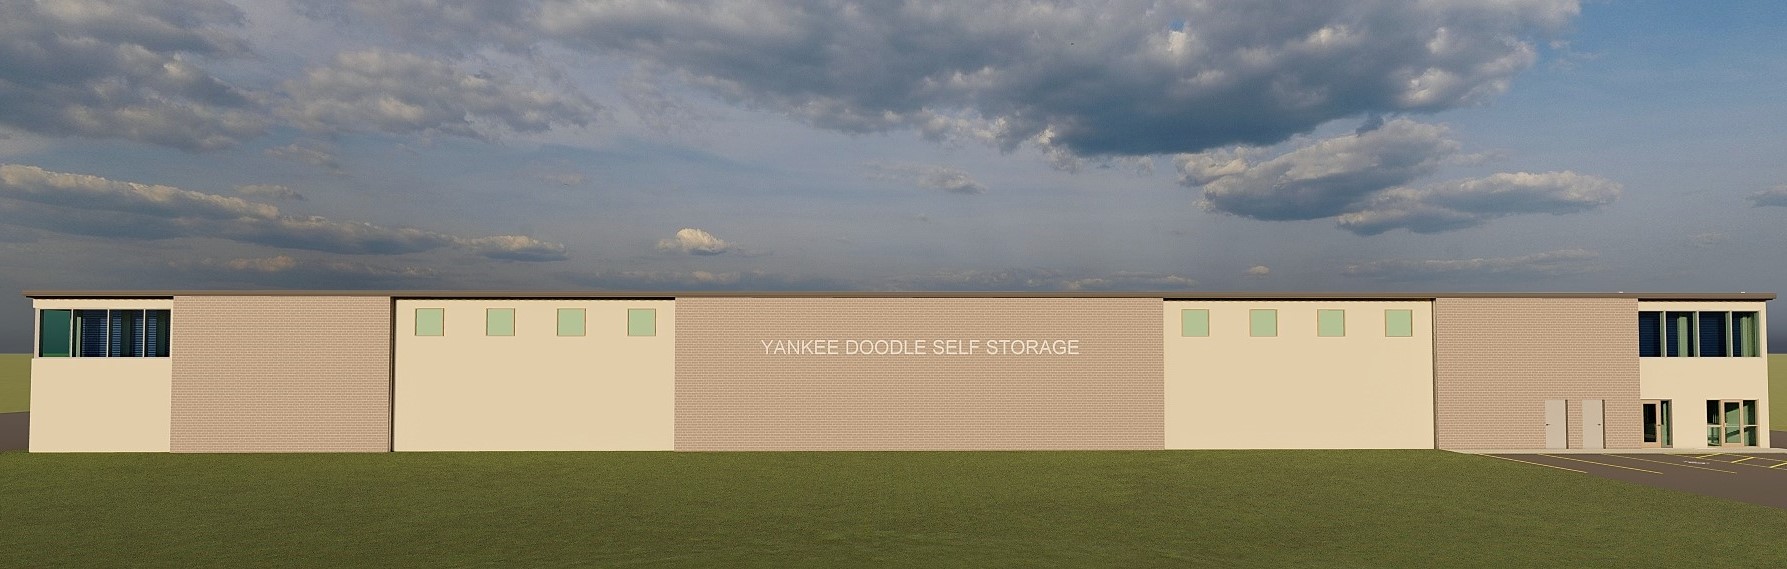 Yankee Doodle Self Storage Facility